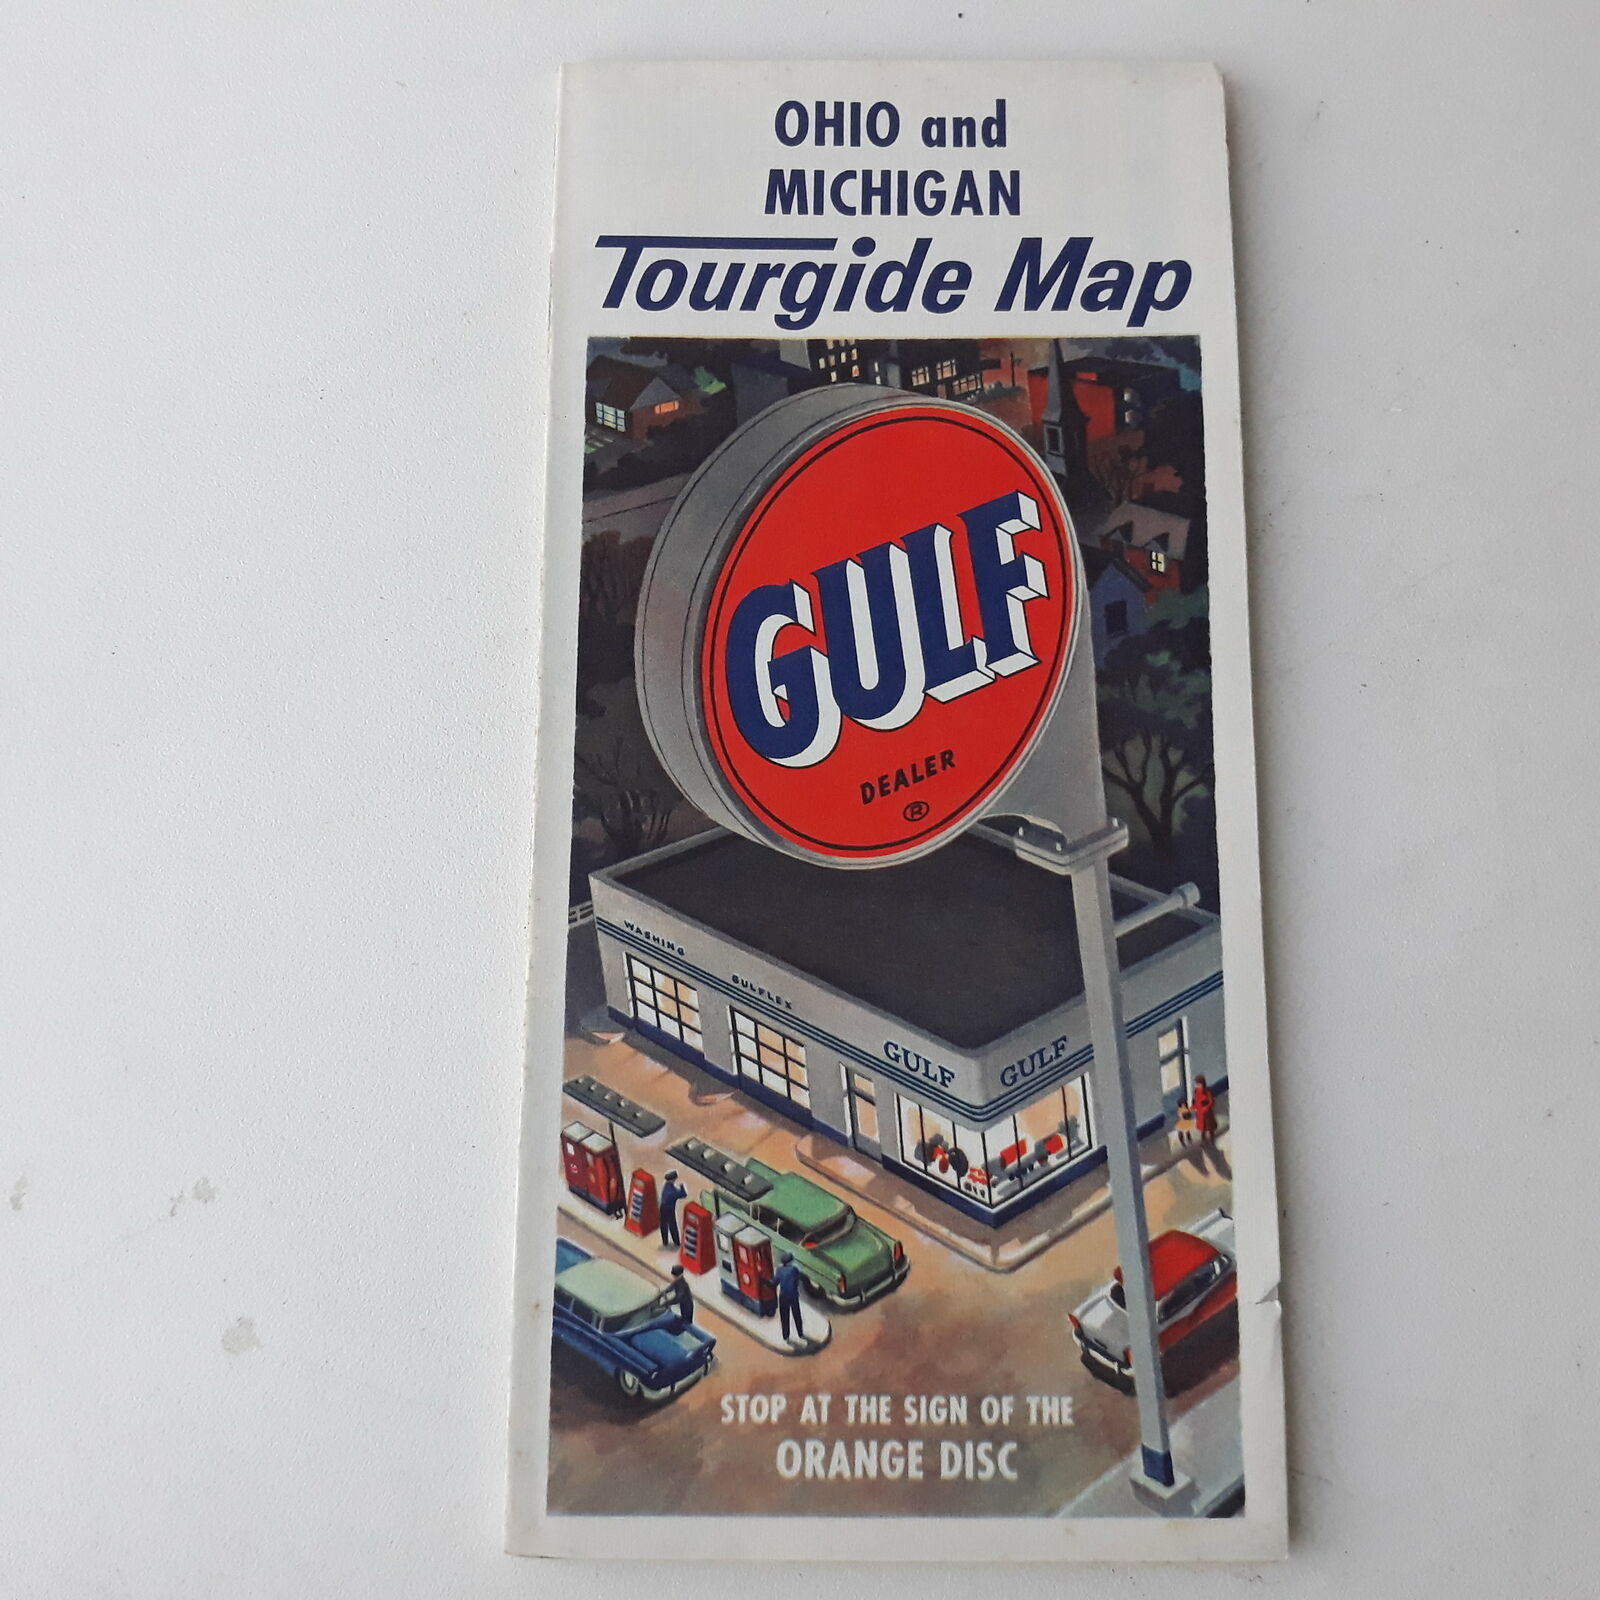 Gulf Dealer Tourgide Map - Ohio And Michigan